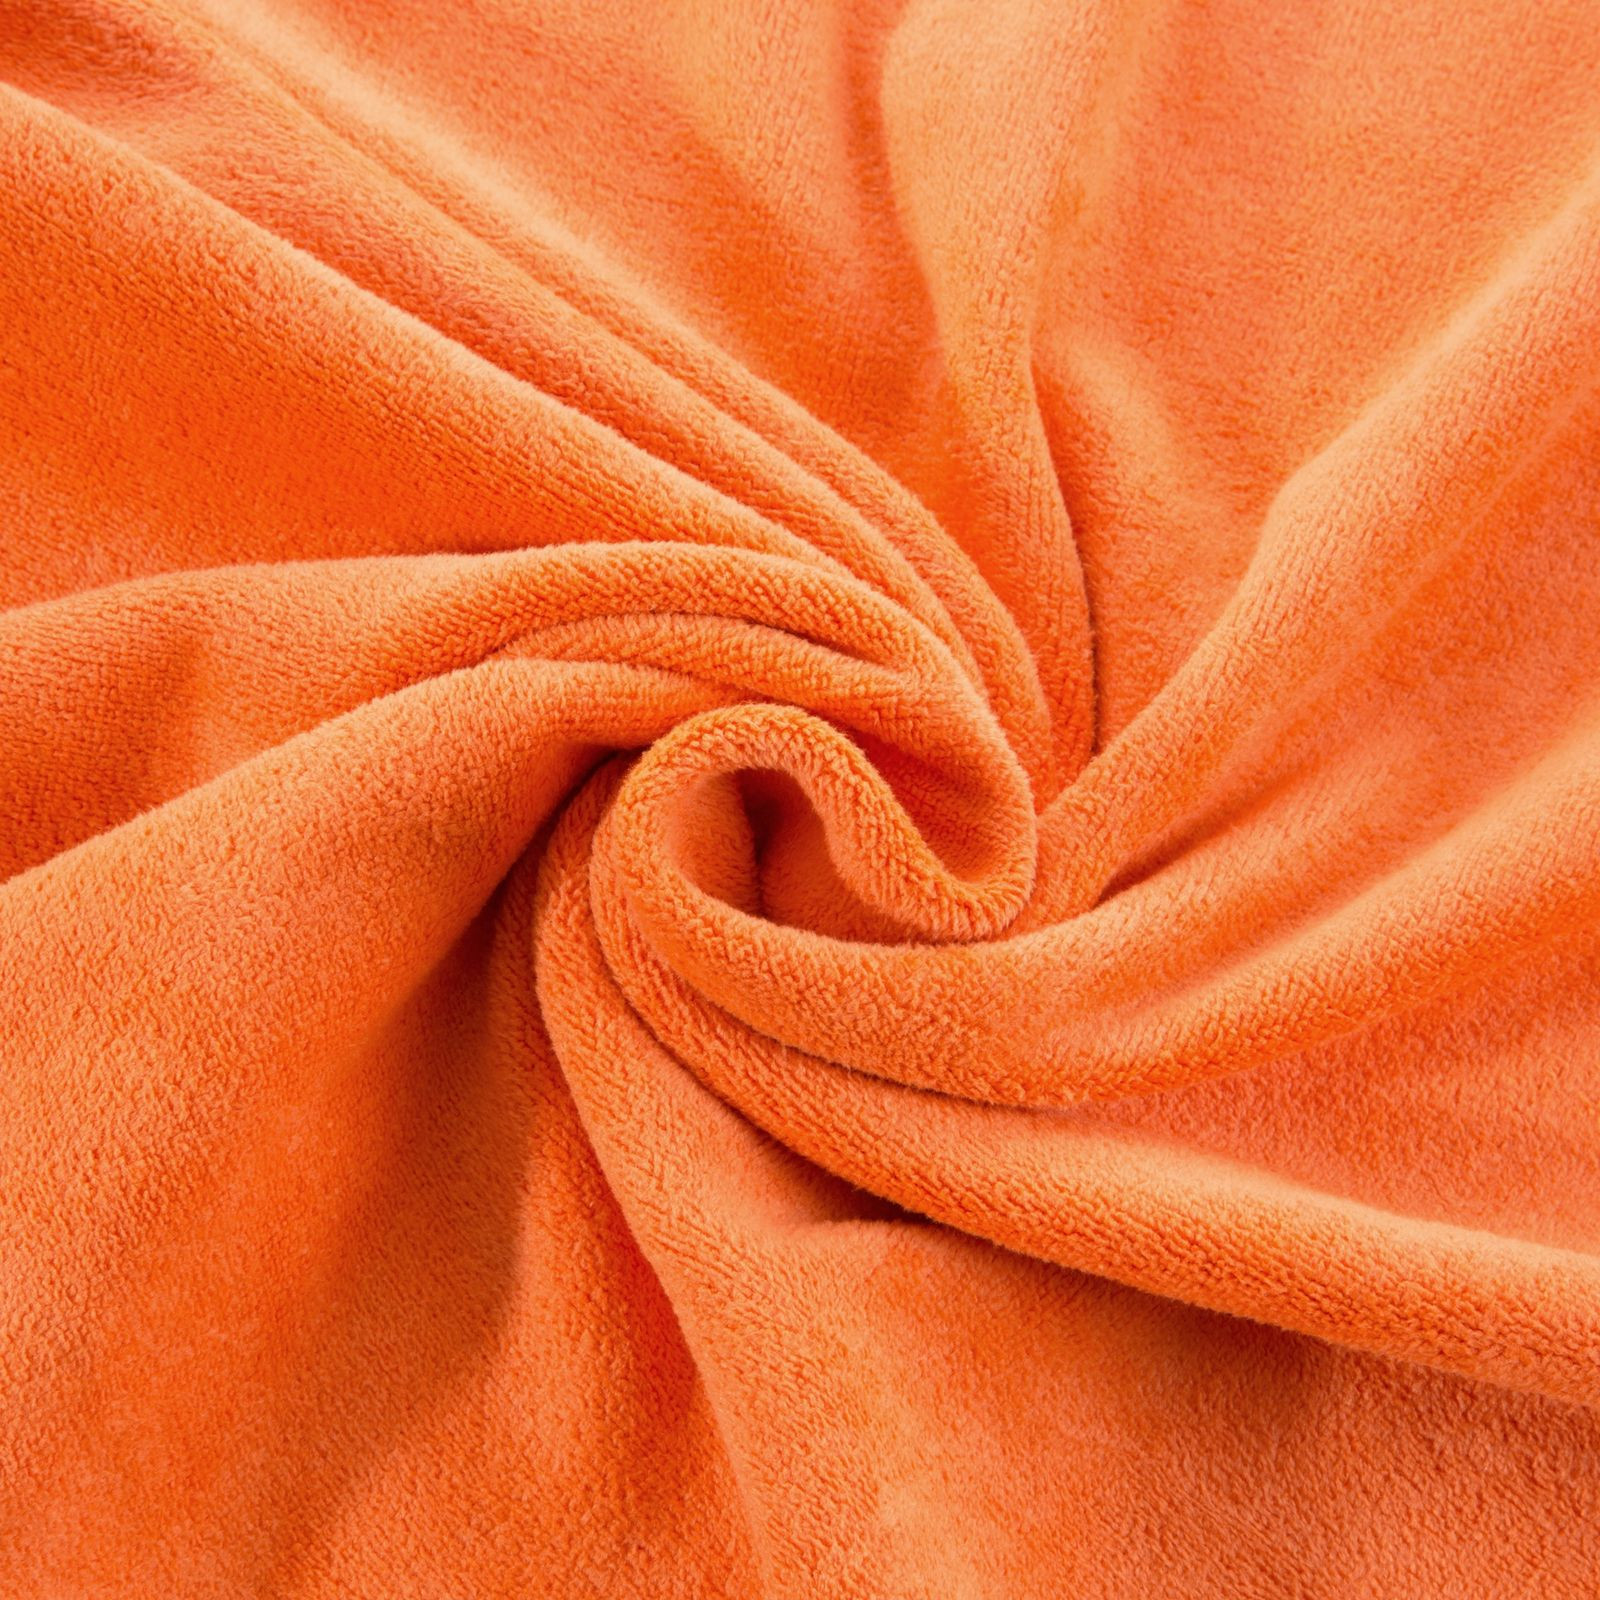 Sada ručníků IGA pomerančová